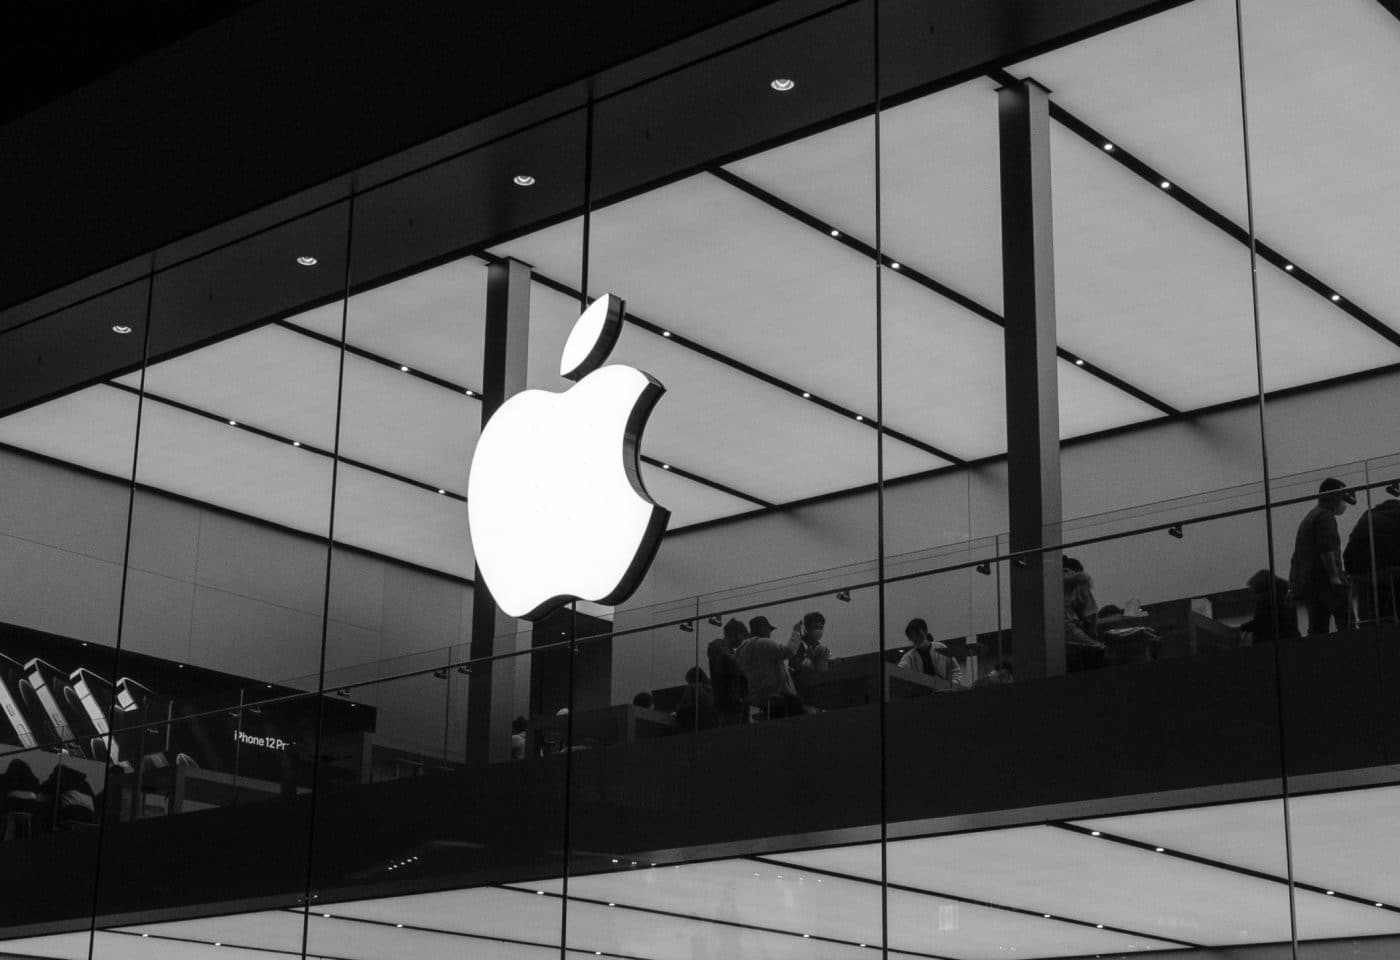 Le logo d'Apple.